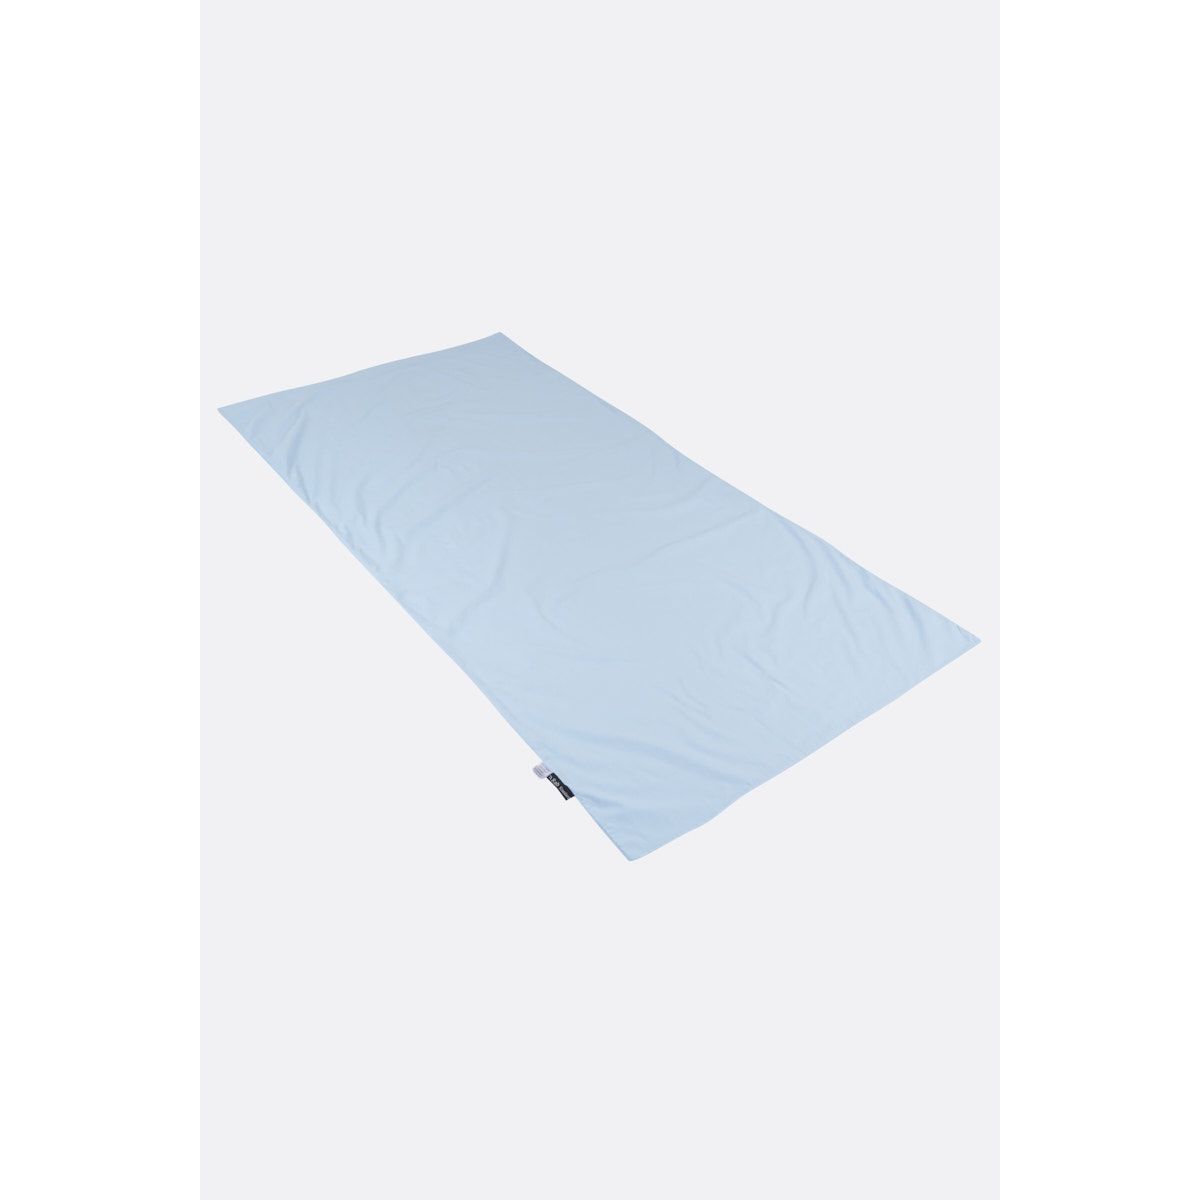 Rab Standard Poly Cotton Sleeping Bag Liner